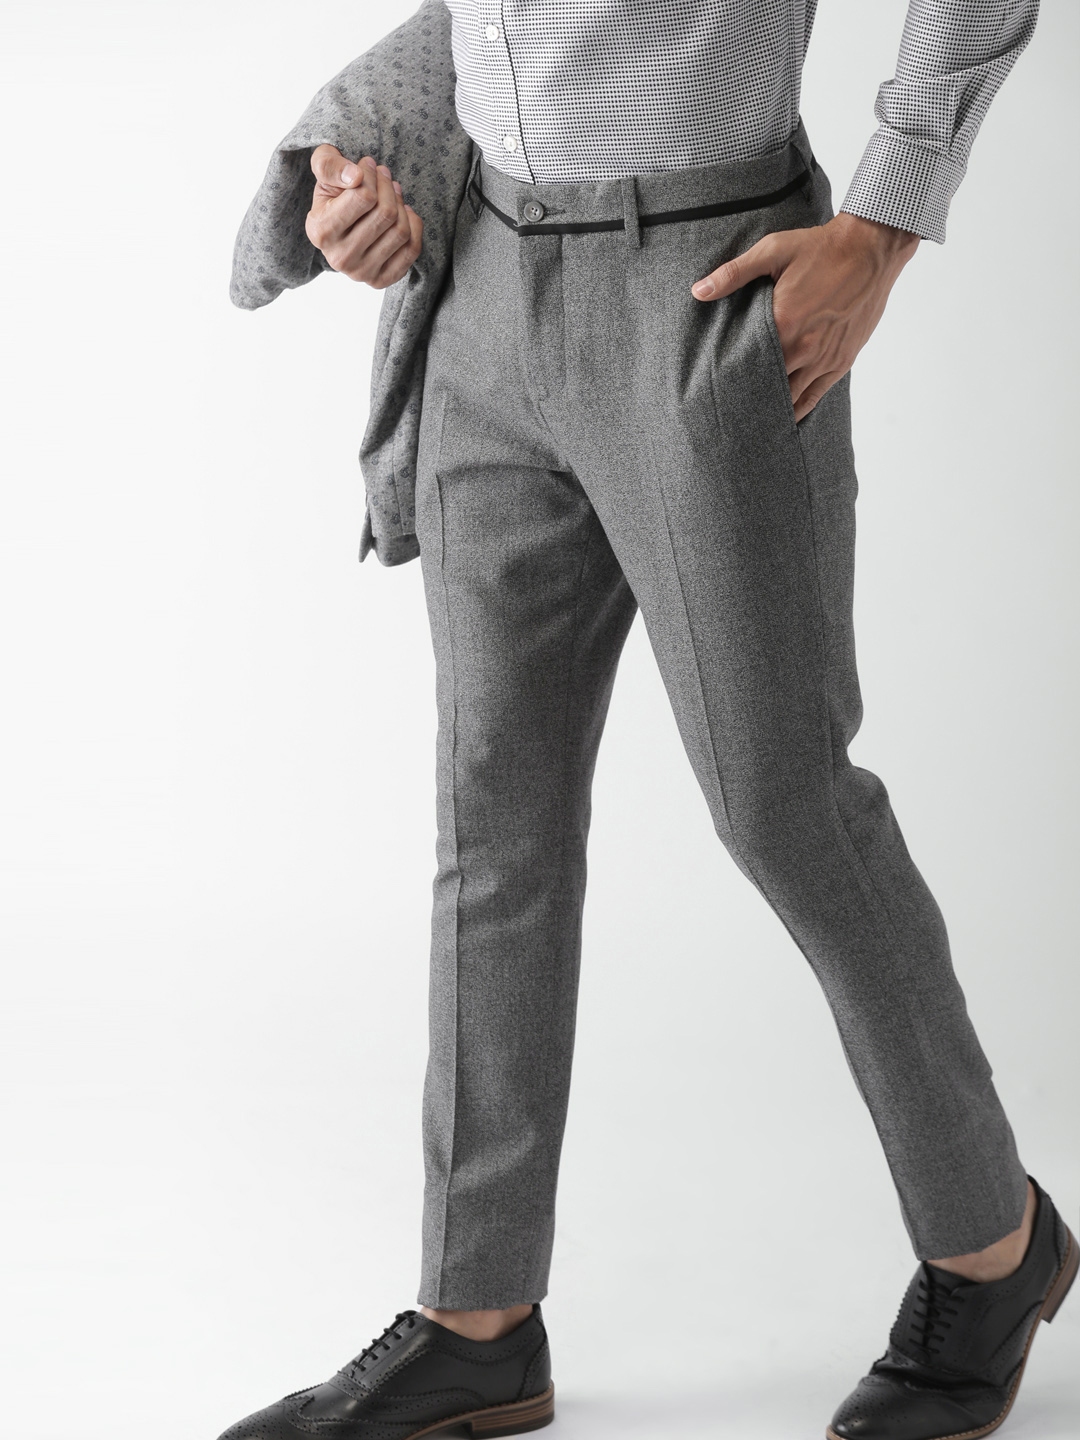 Buy Parx Dark Grey Trouser Size 30XMTX03162G6 at Amazonin